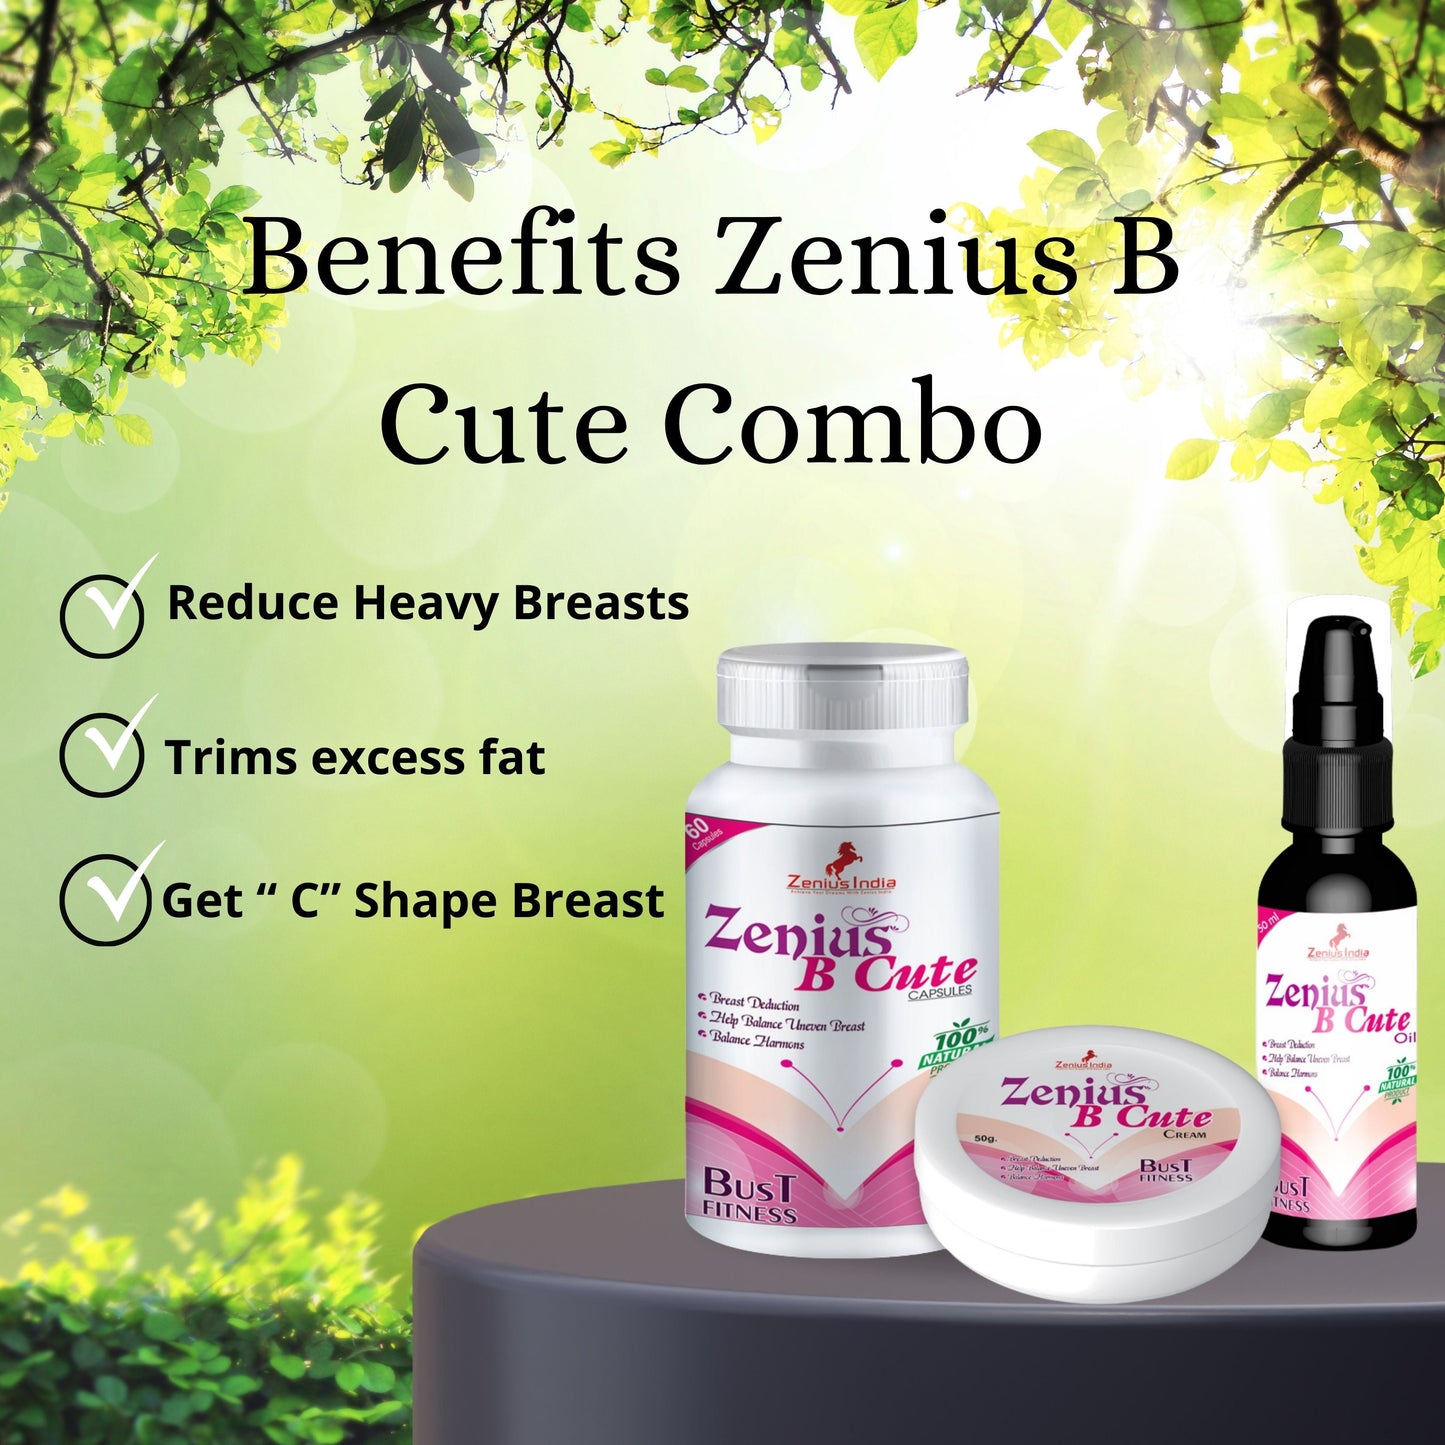 Zenius B Cute for breast reduction & Breast Tightening Combo for Women’s Zenius India